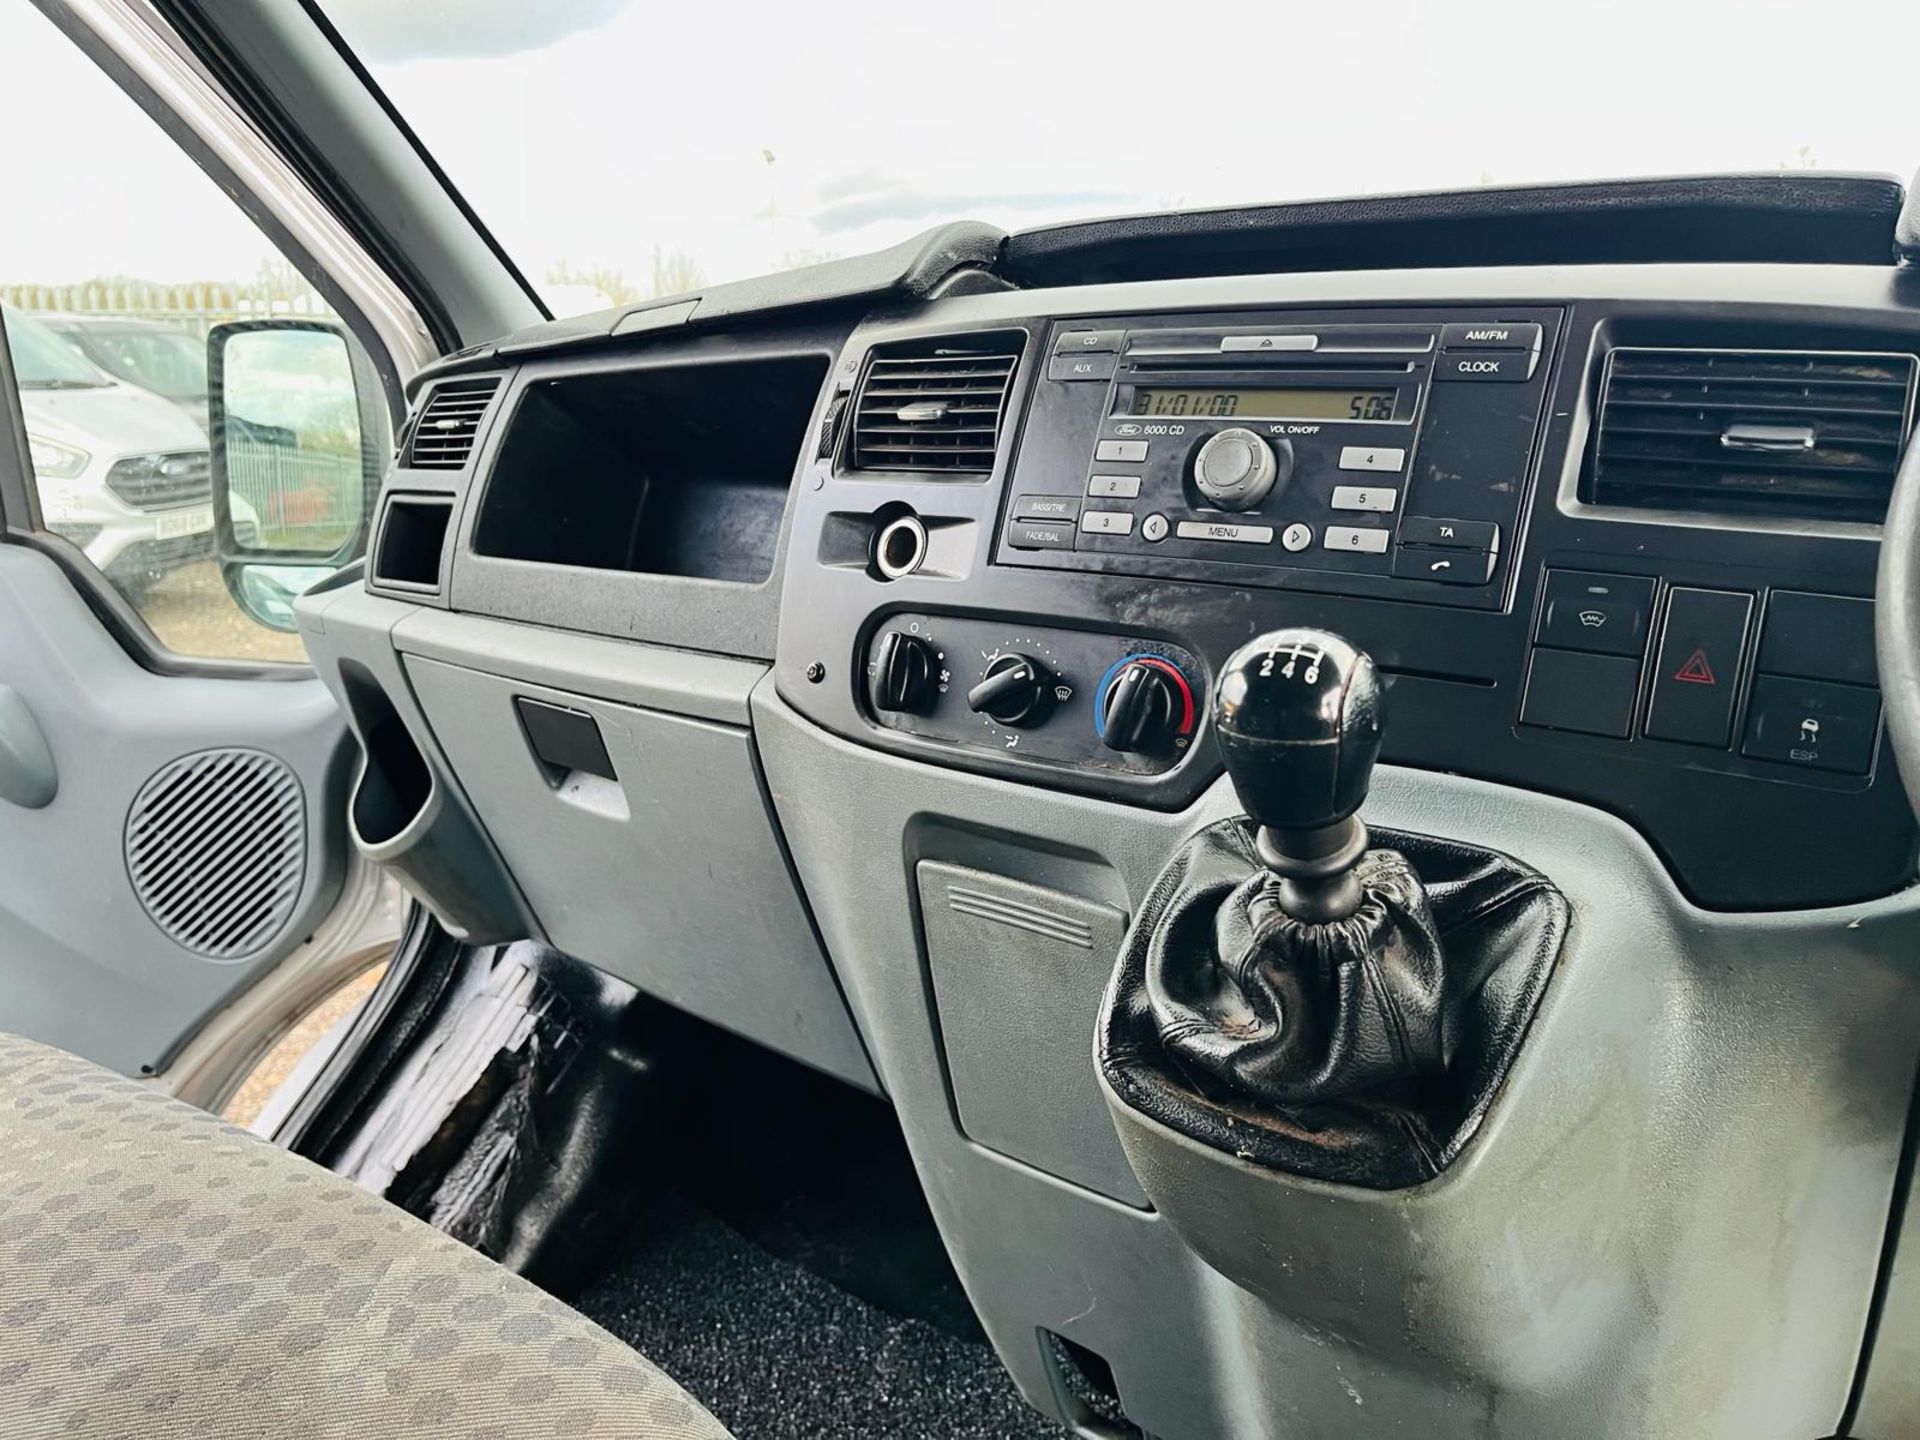 ** ON SALE ** Ford Transit 2.2 TDCI 125 FWD L1 H1 2013 '63 Reg' Panel Van - Only 83,892 Miles - Image 16 of 24